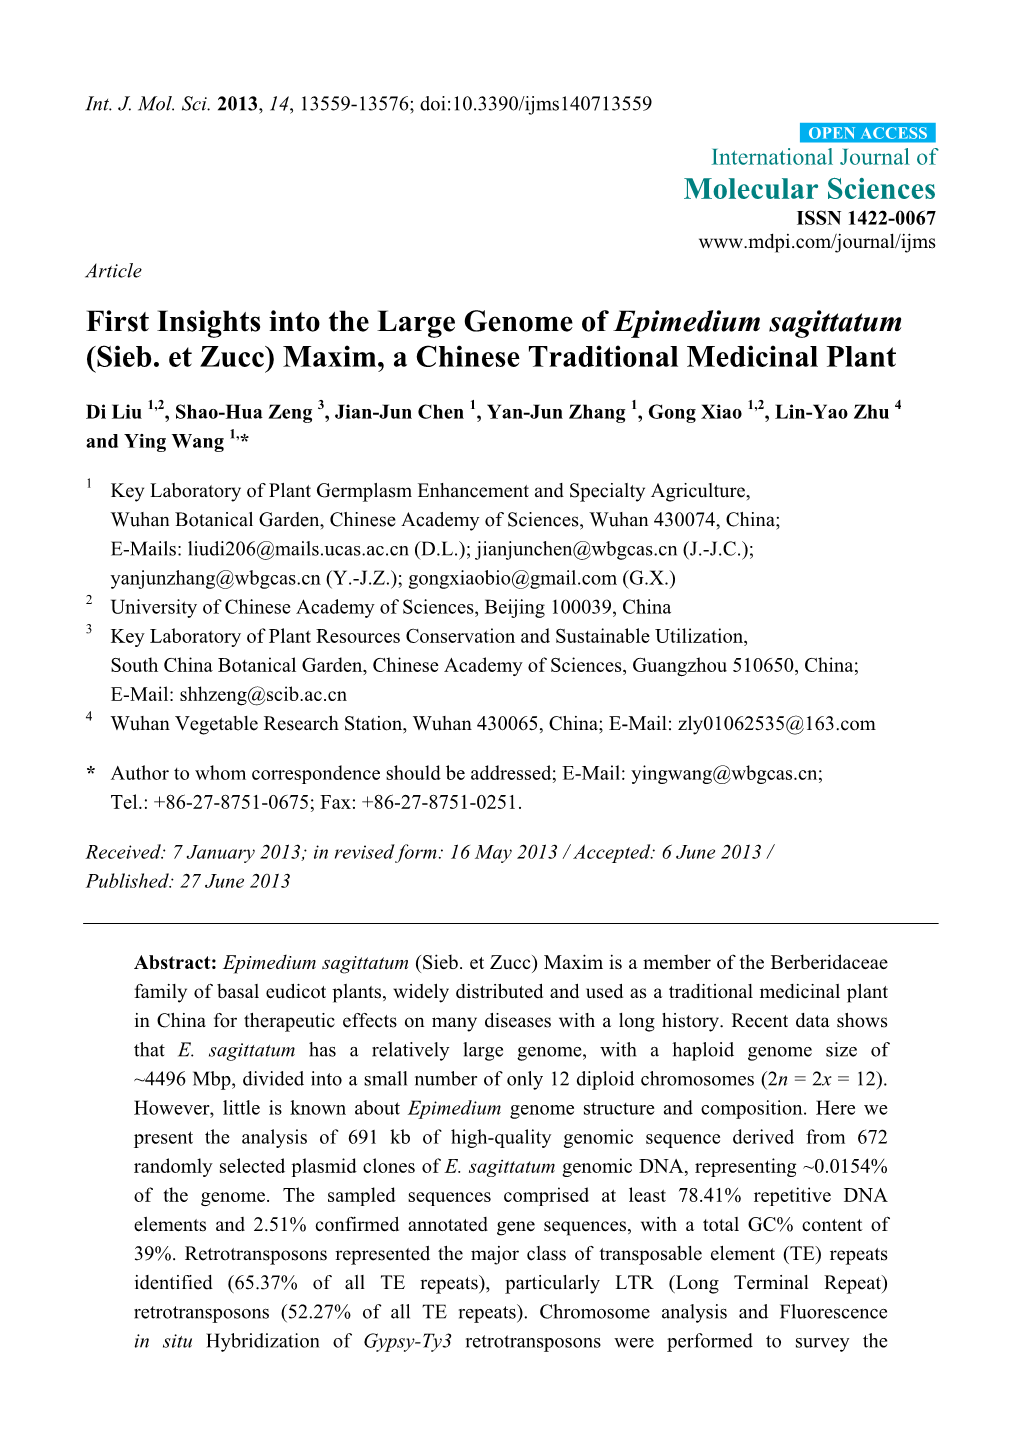 First Insights Into the Large Genome of Epimedium Sagittatum (Sieb